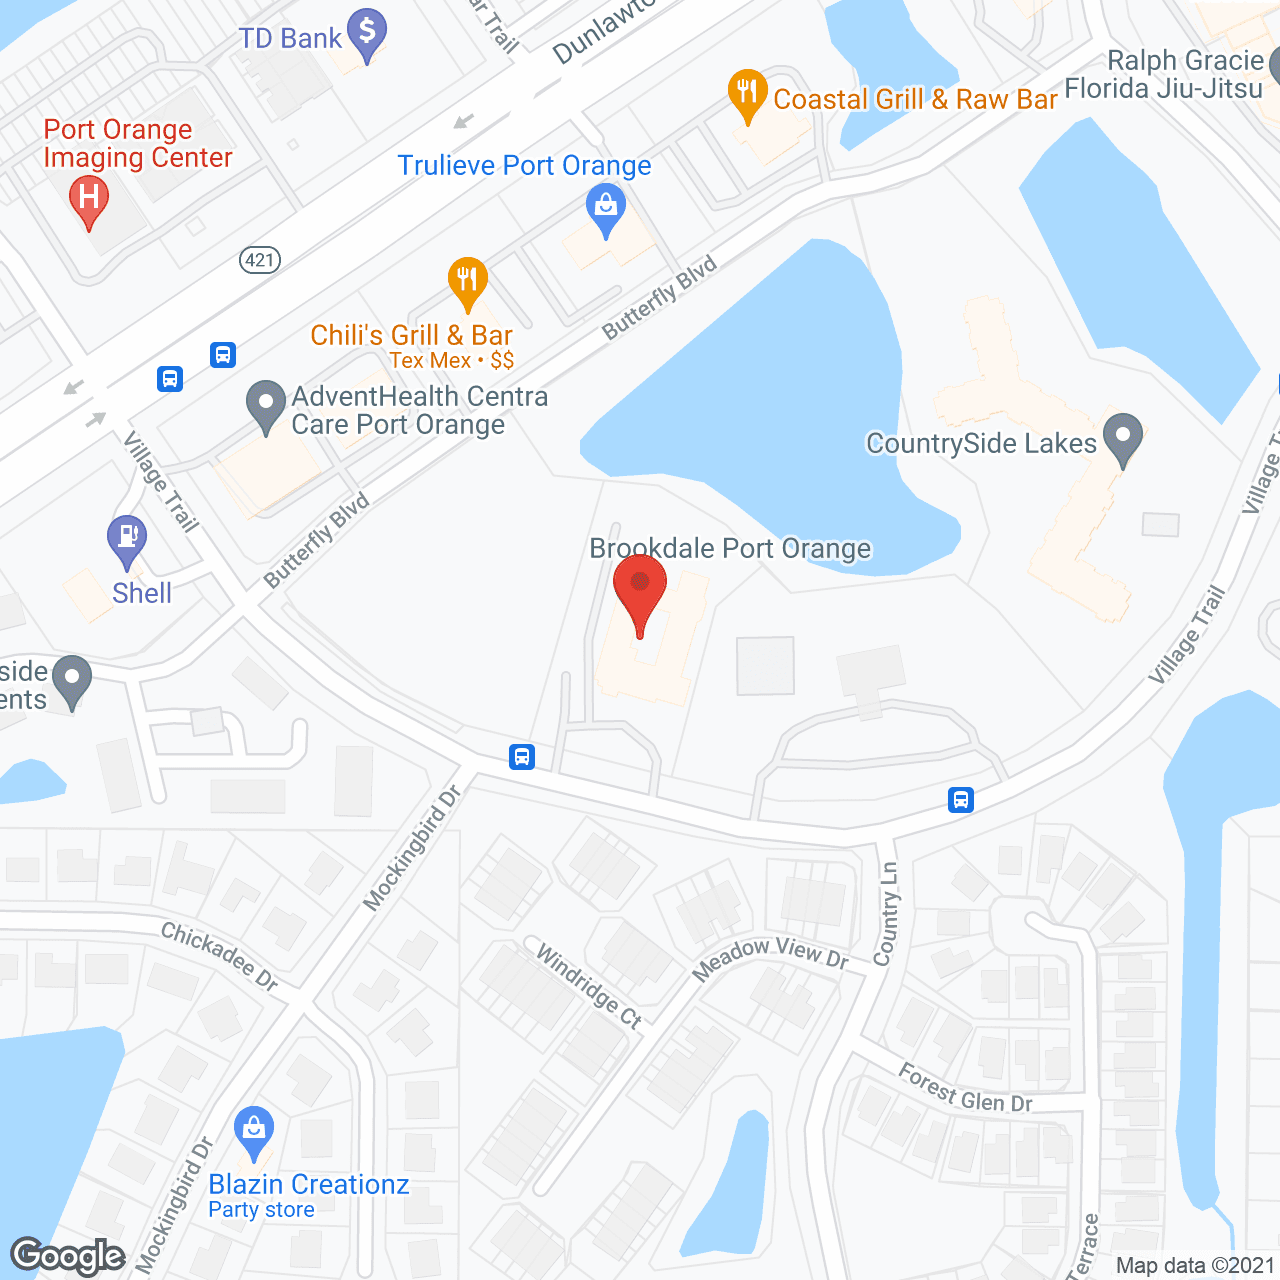 Brookdale Port Orange in google map